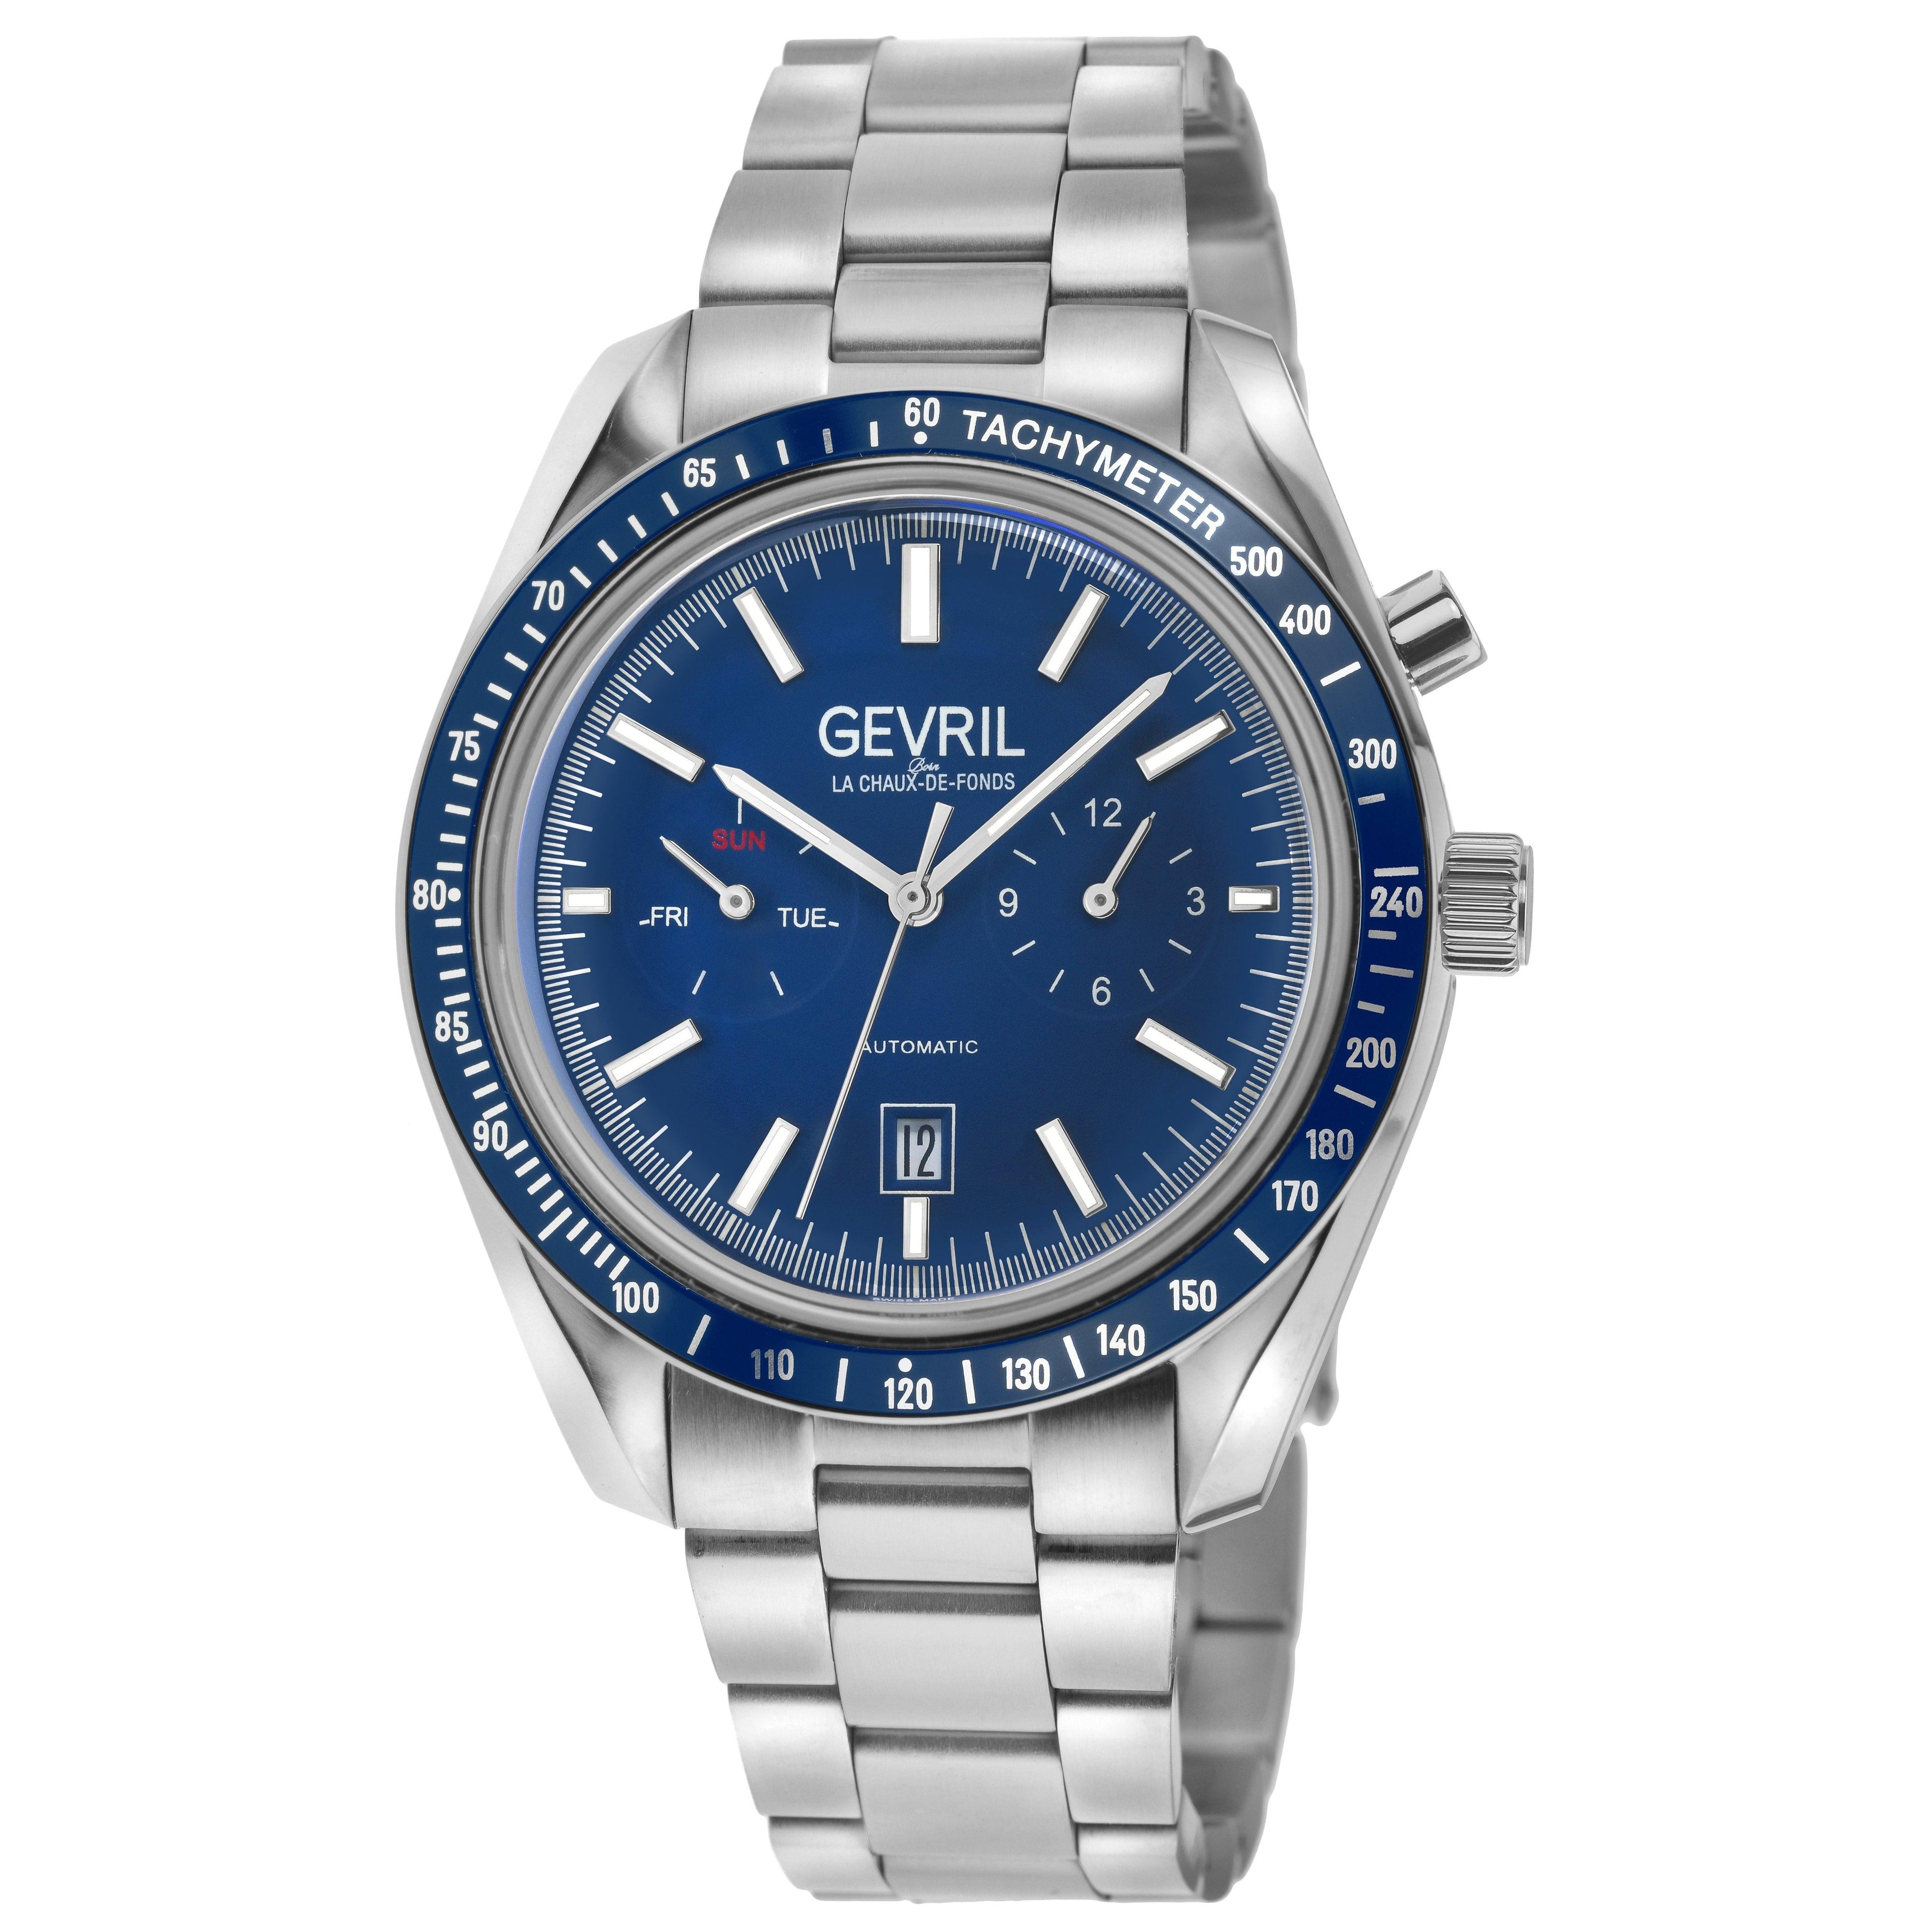 Gevril Wallstreet Chronograph Automatic Blue Dial Men's Watch 4160  840840144348 - Watches, Wallstreet - Jomashop